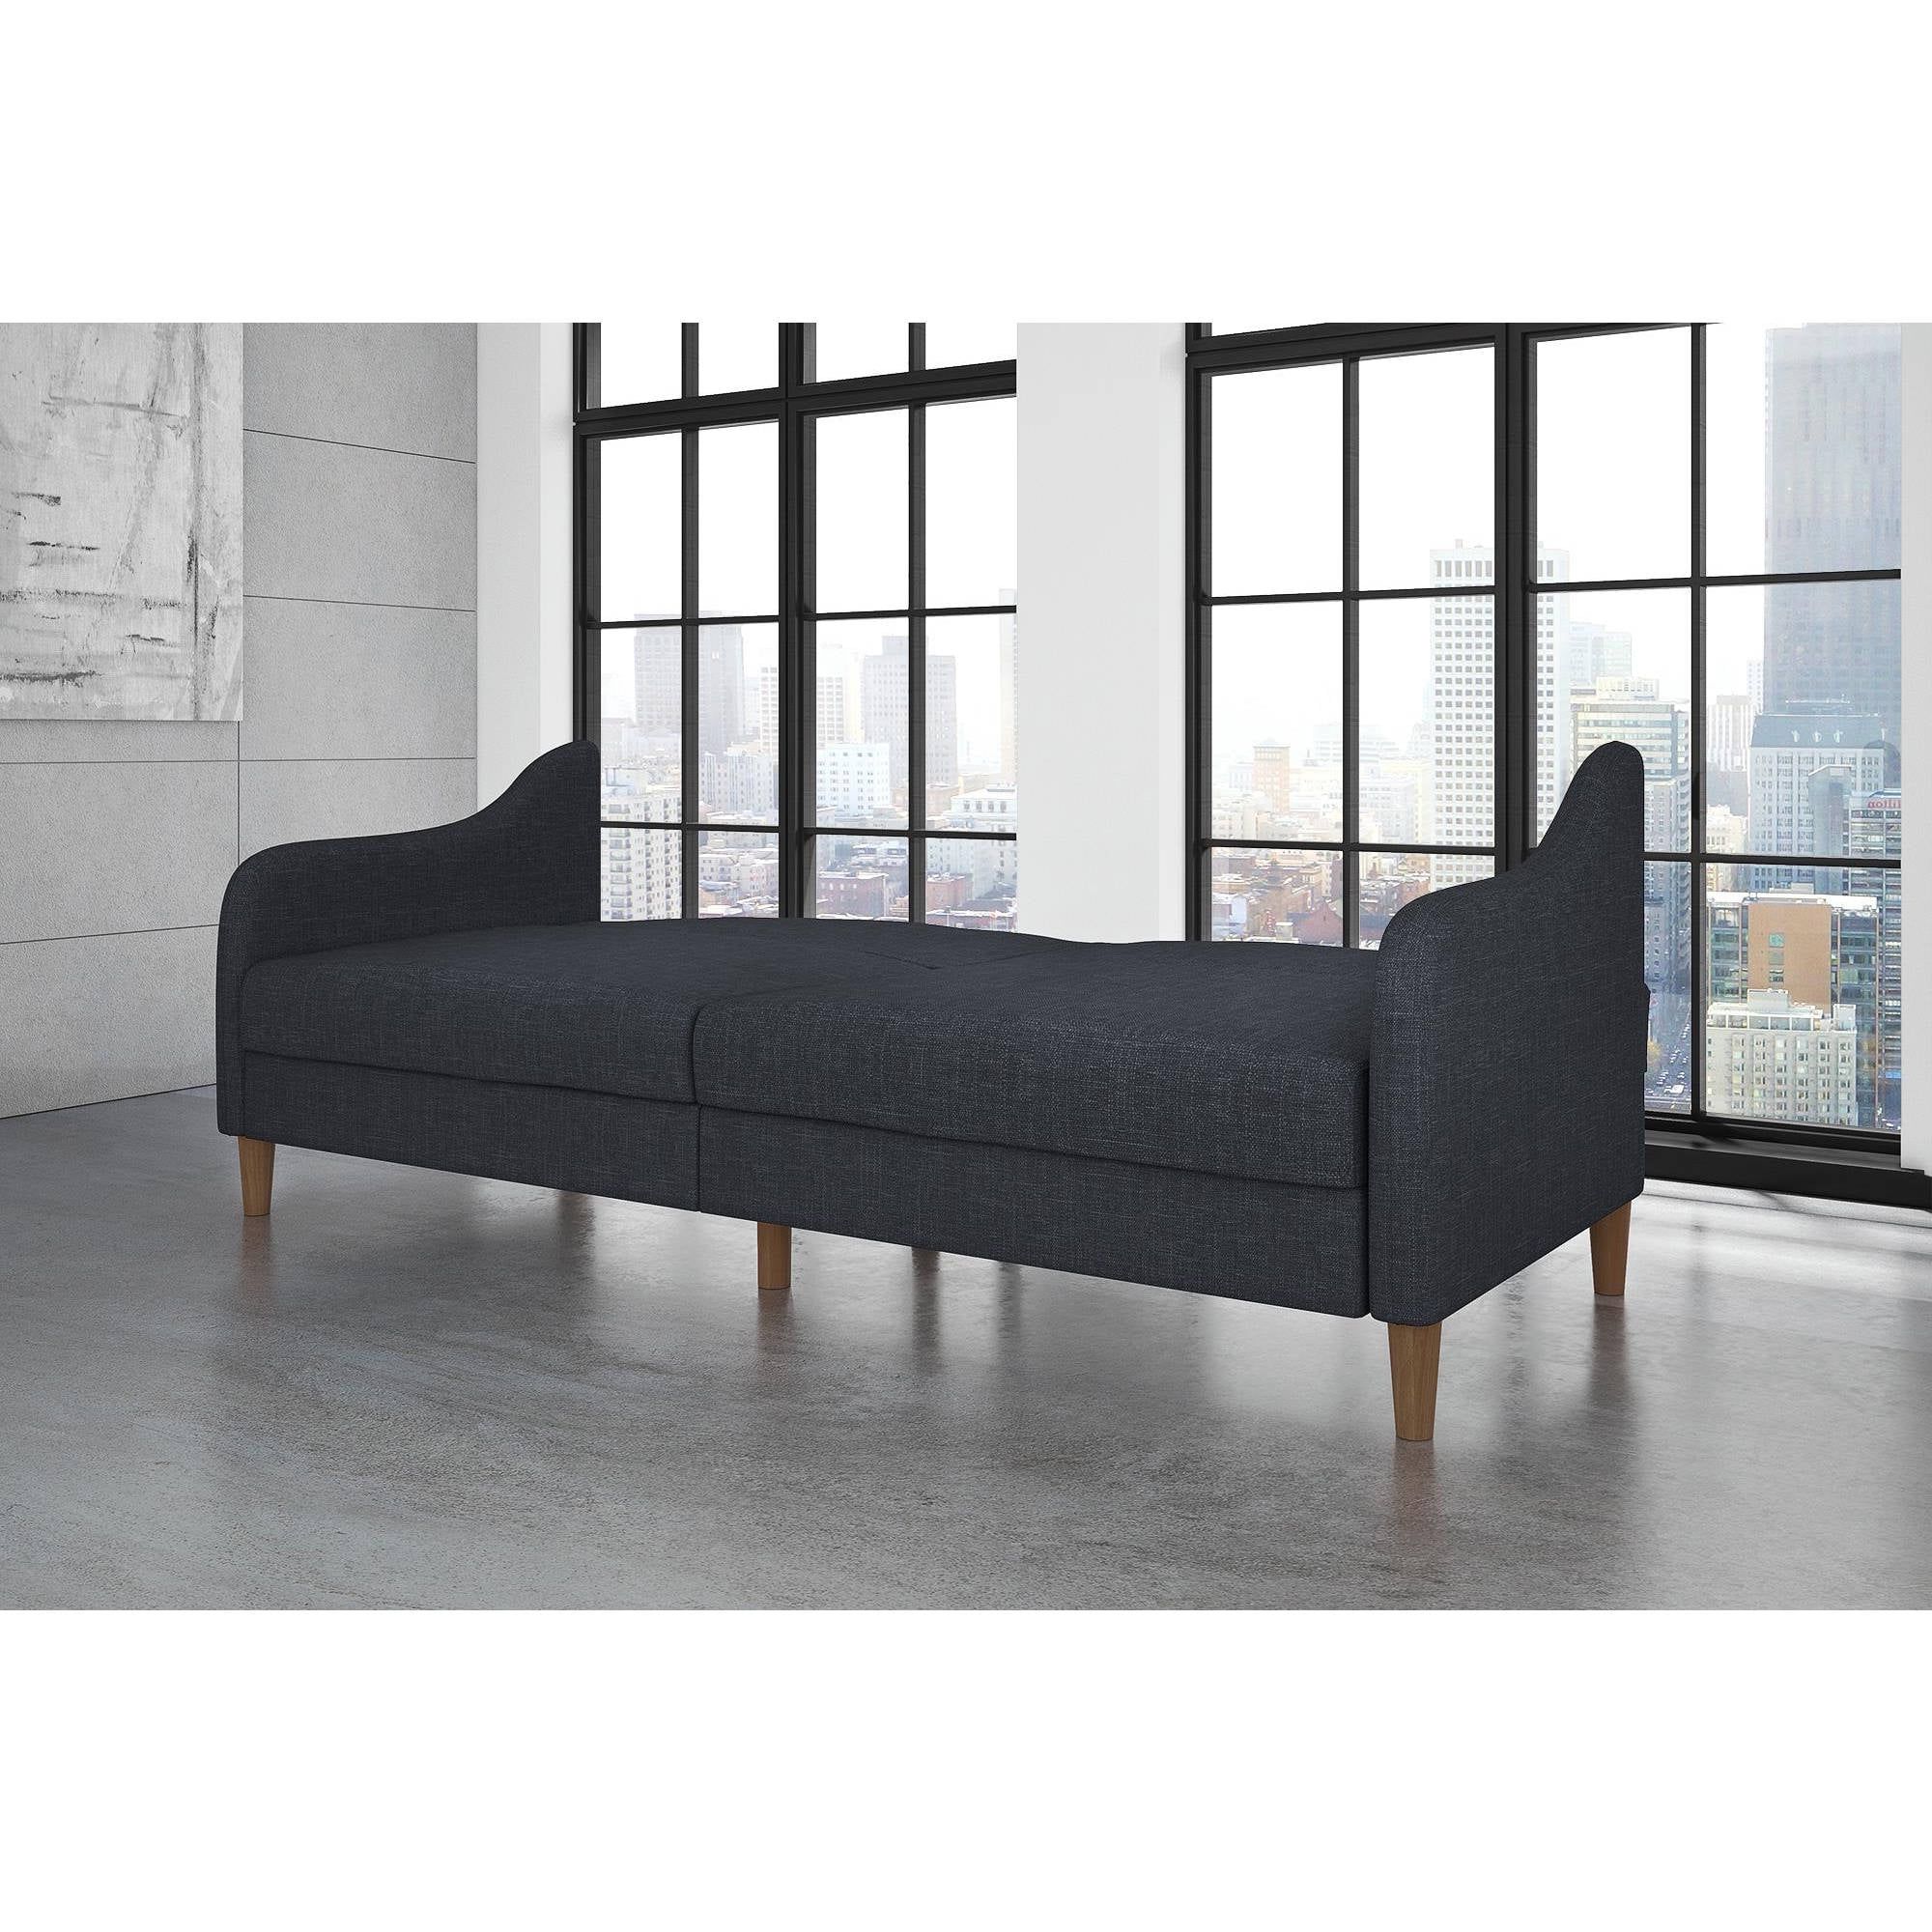 Convertible Jasper Coil Sofa Sleeper Futon Navy Linen Upholstery Couch Regarding Well Known Navy Linen Coil Sofas (Photo 1 of 15)